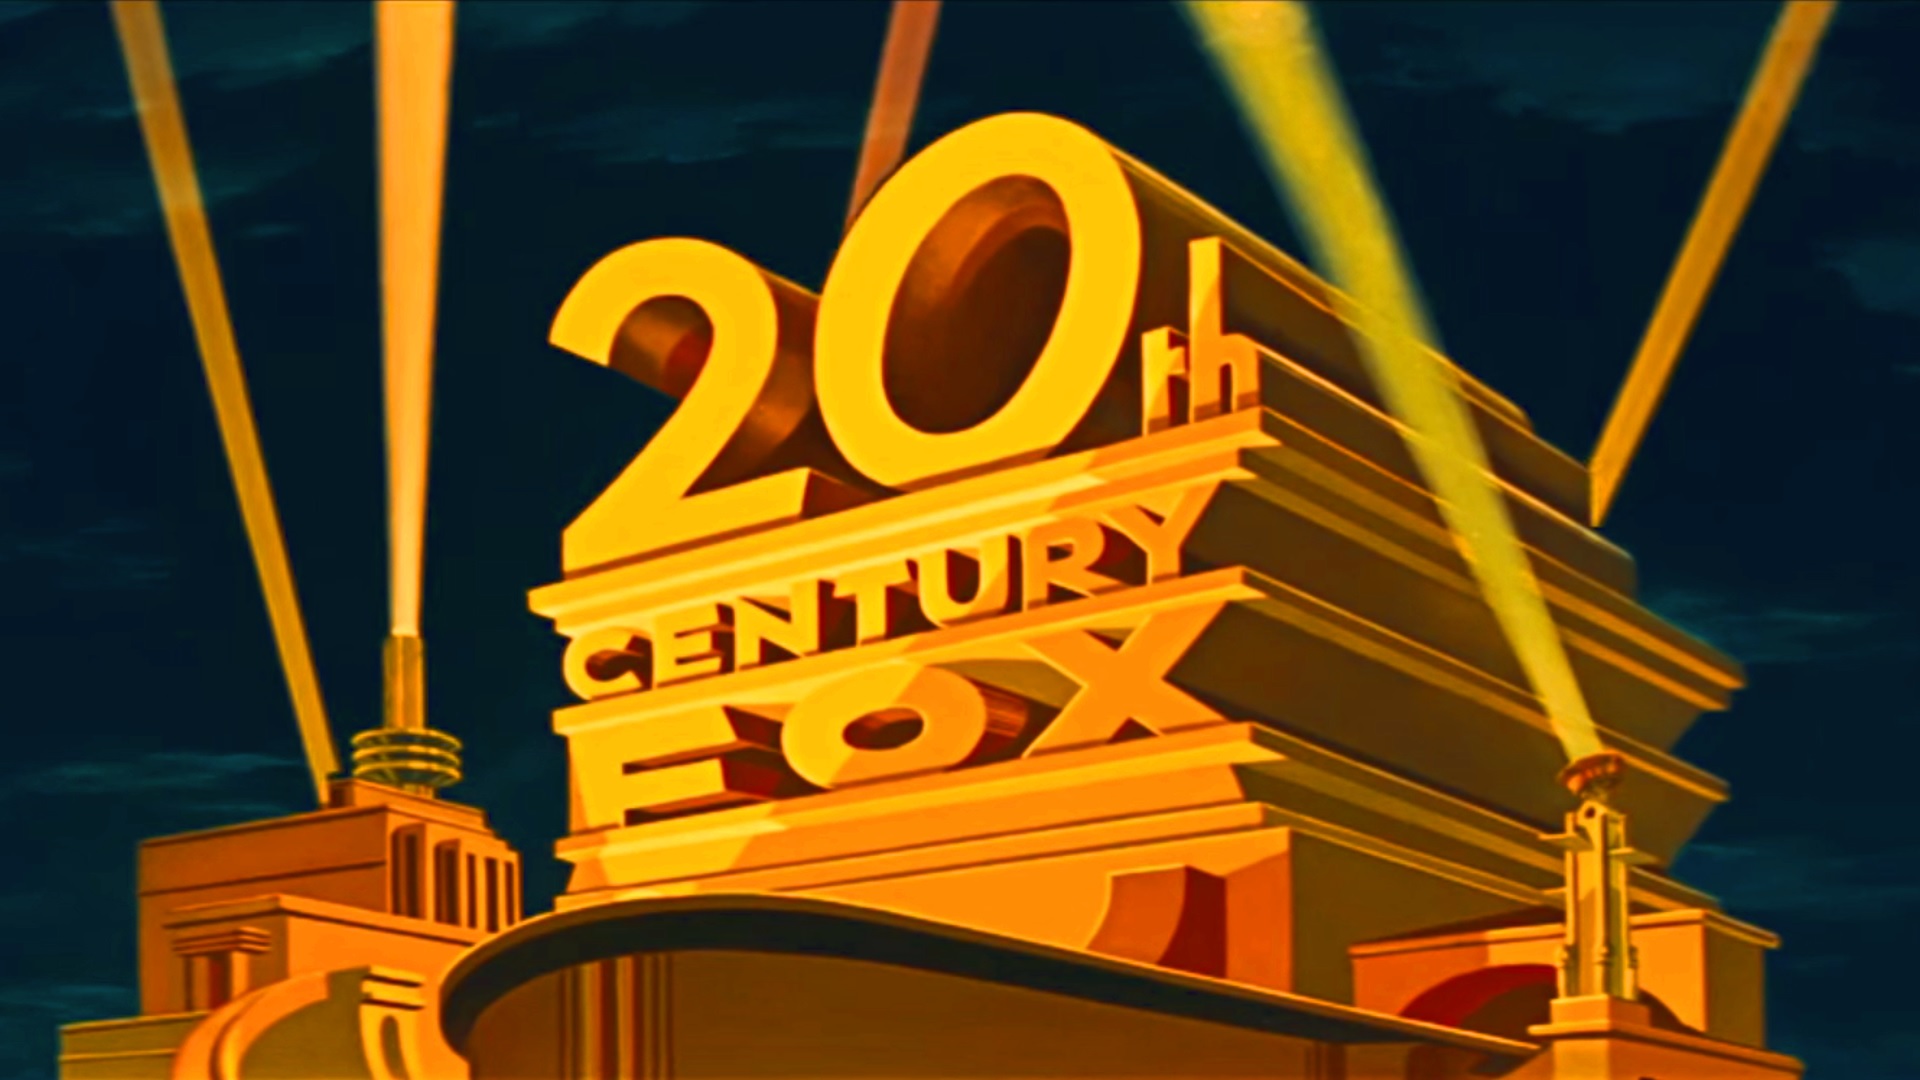 Did this logo just copy the 20th Century Fox Logo?